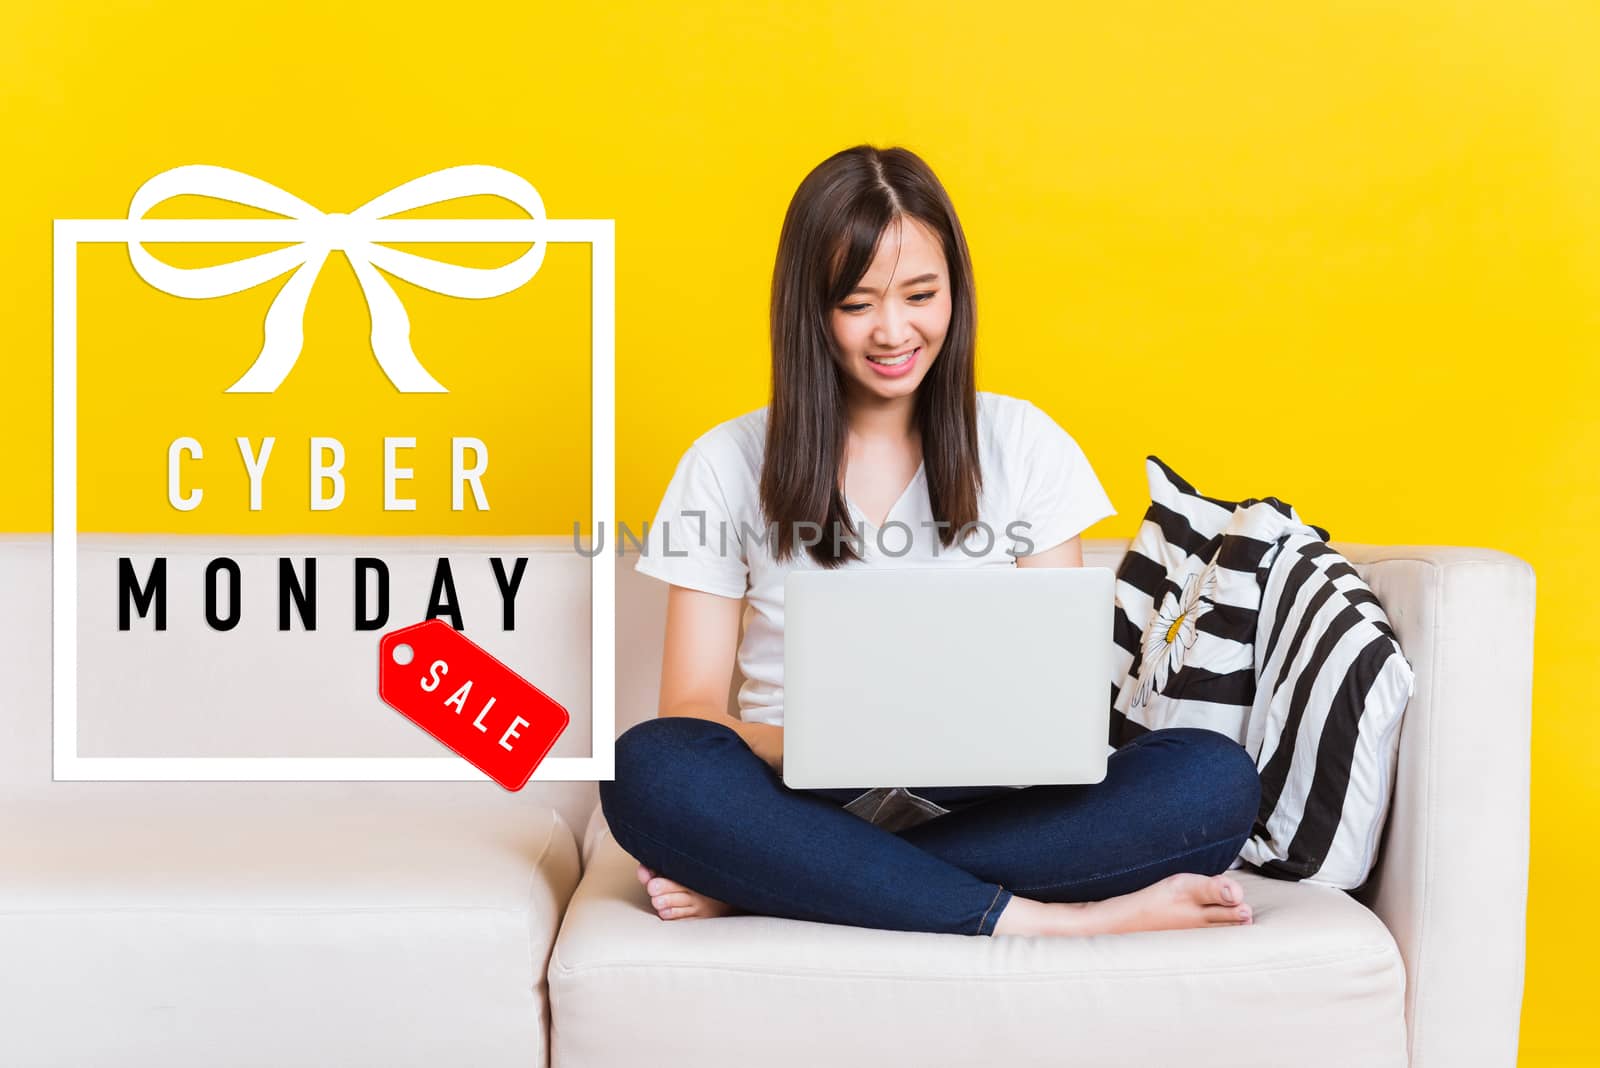 woman shopping online, sitting on sofa using laptop computer by Sorapop